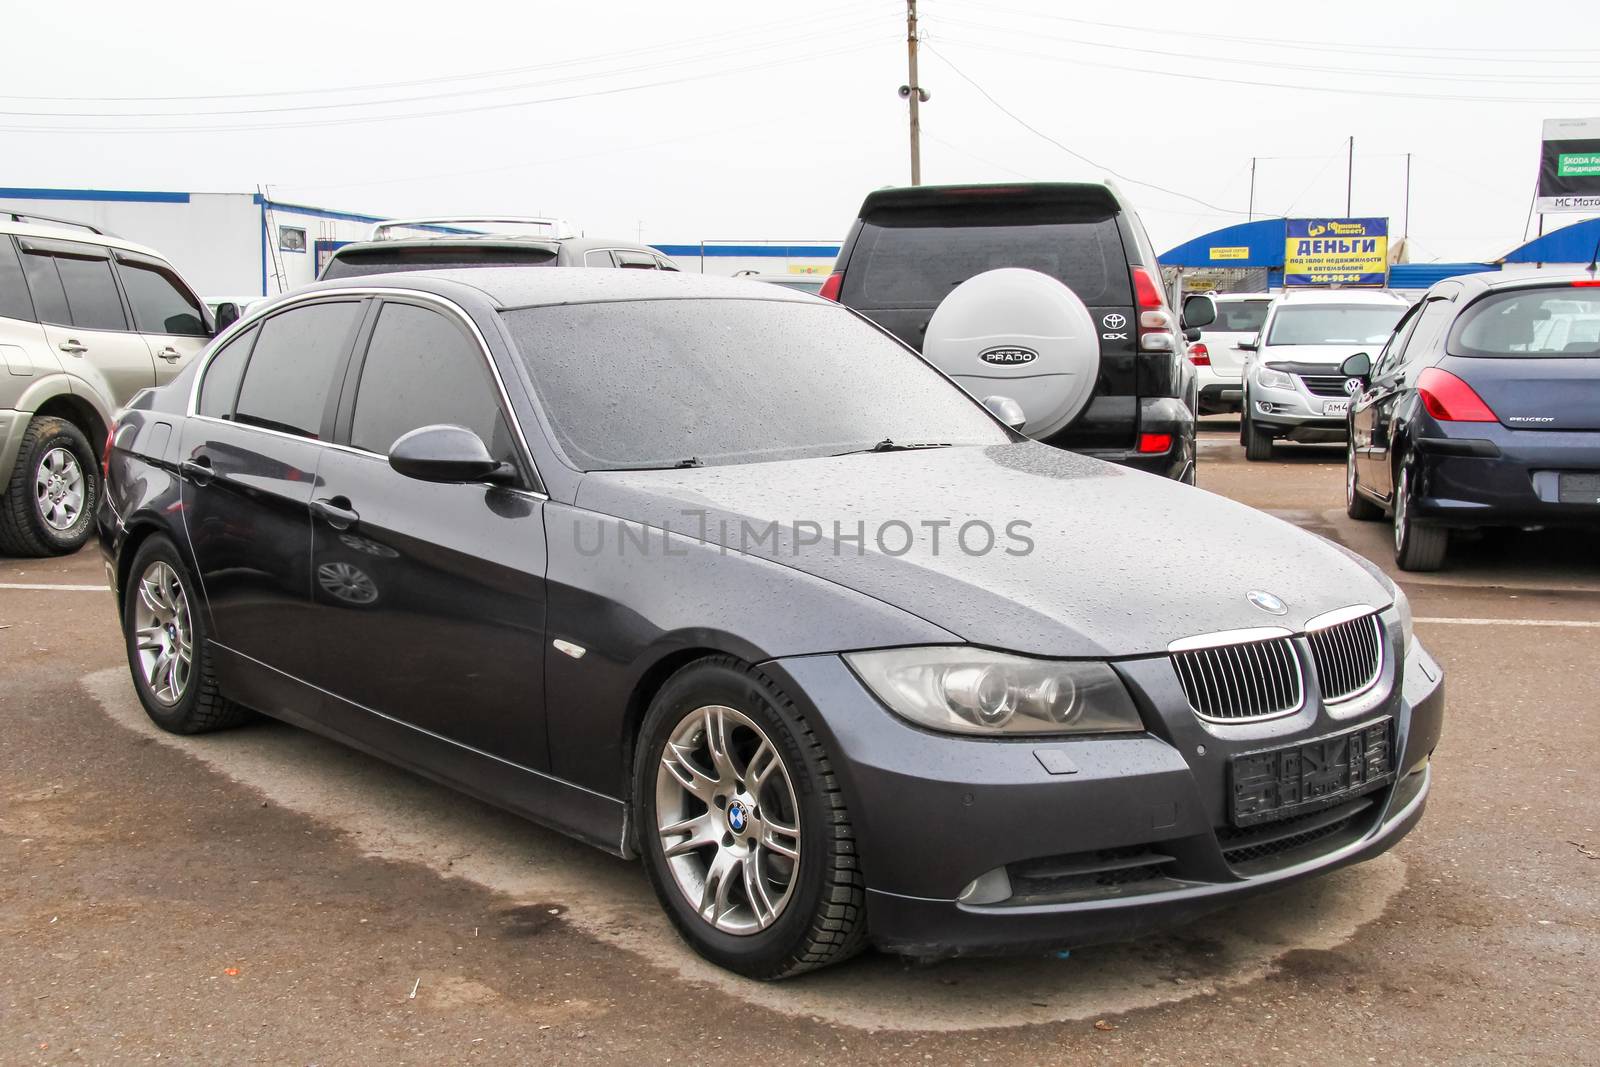 UFA, RUSSIA - APRIL 19, 2012: Motor car BMW E90 3-series at the used cars trade center.